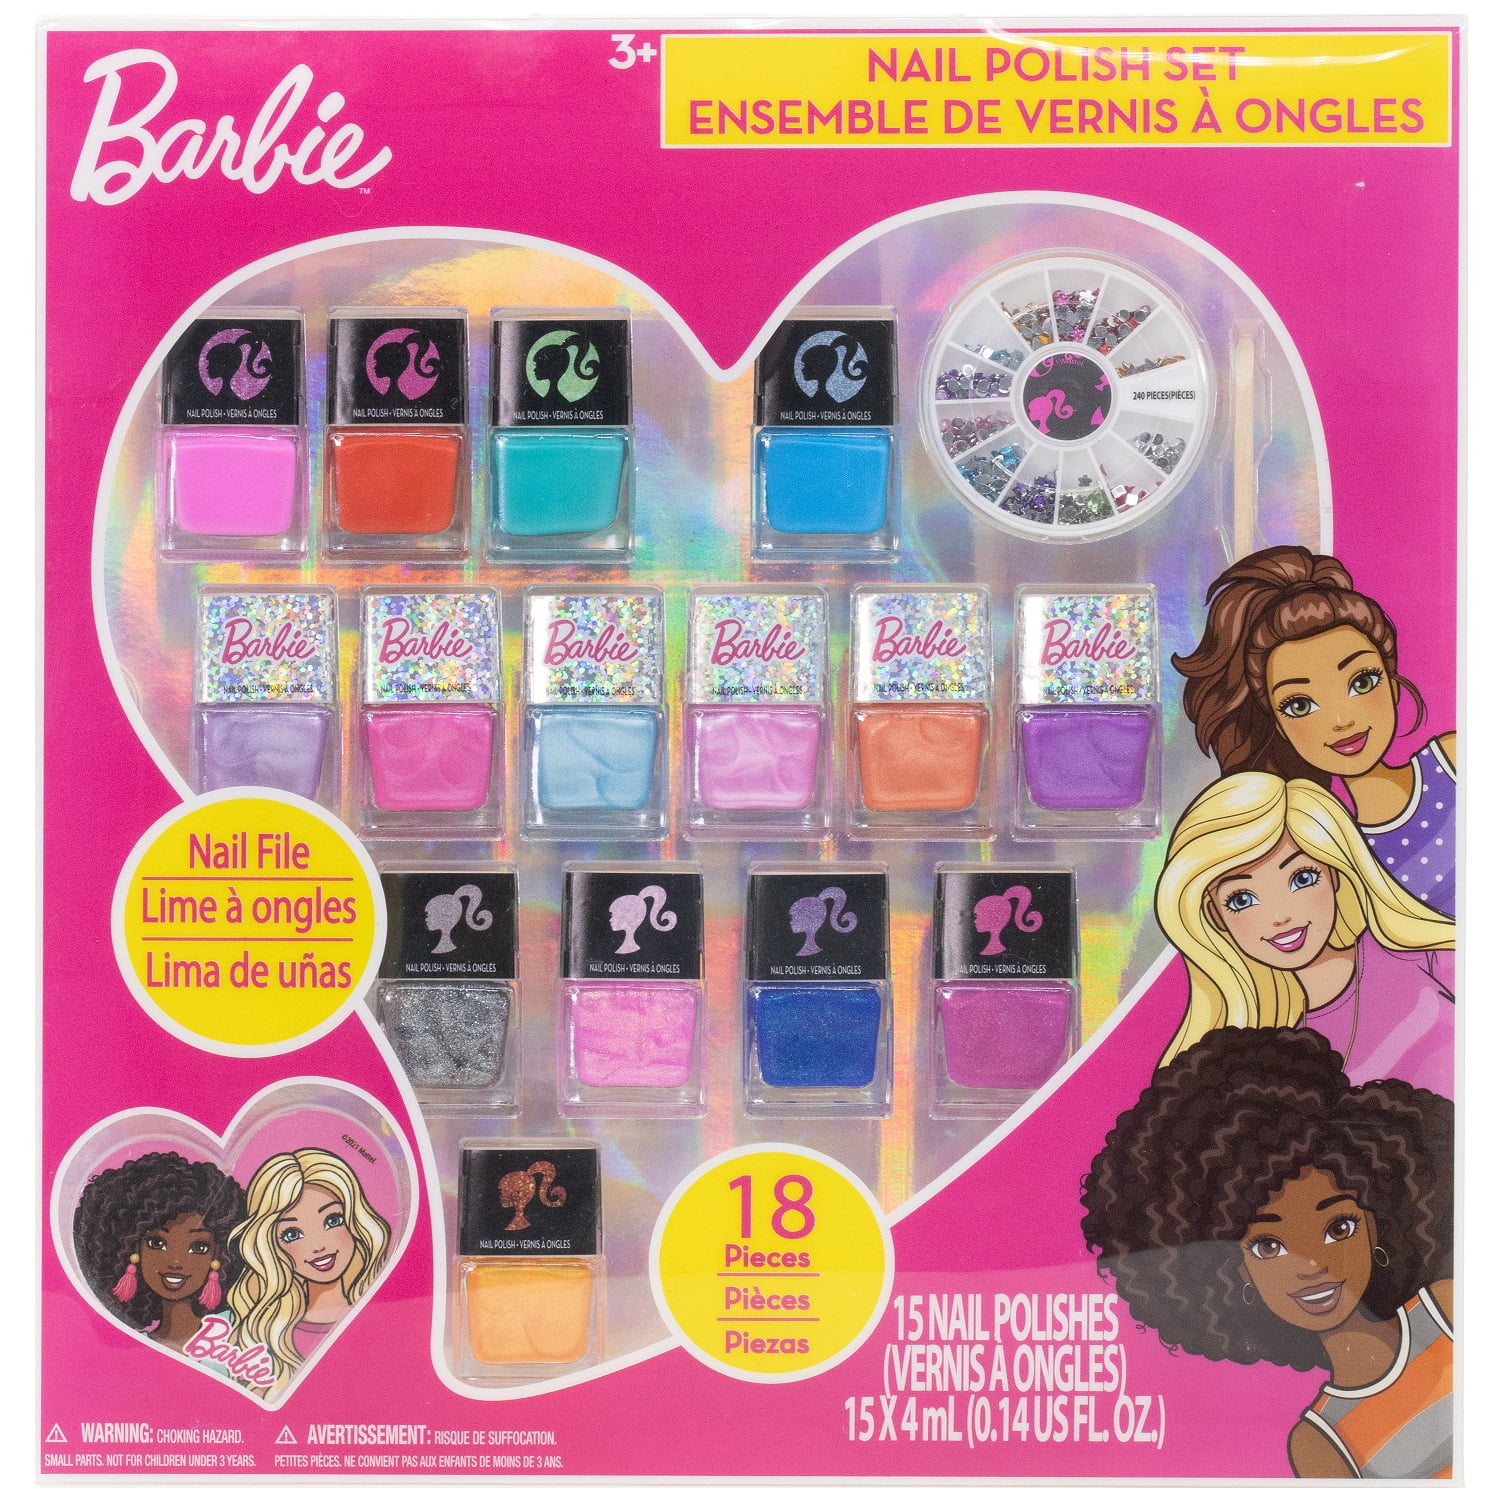 Brilliant Barbie Girl Stickers - Juego de 12